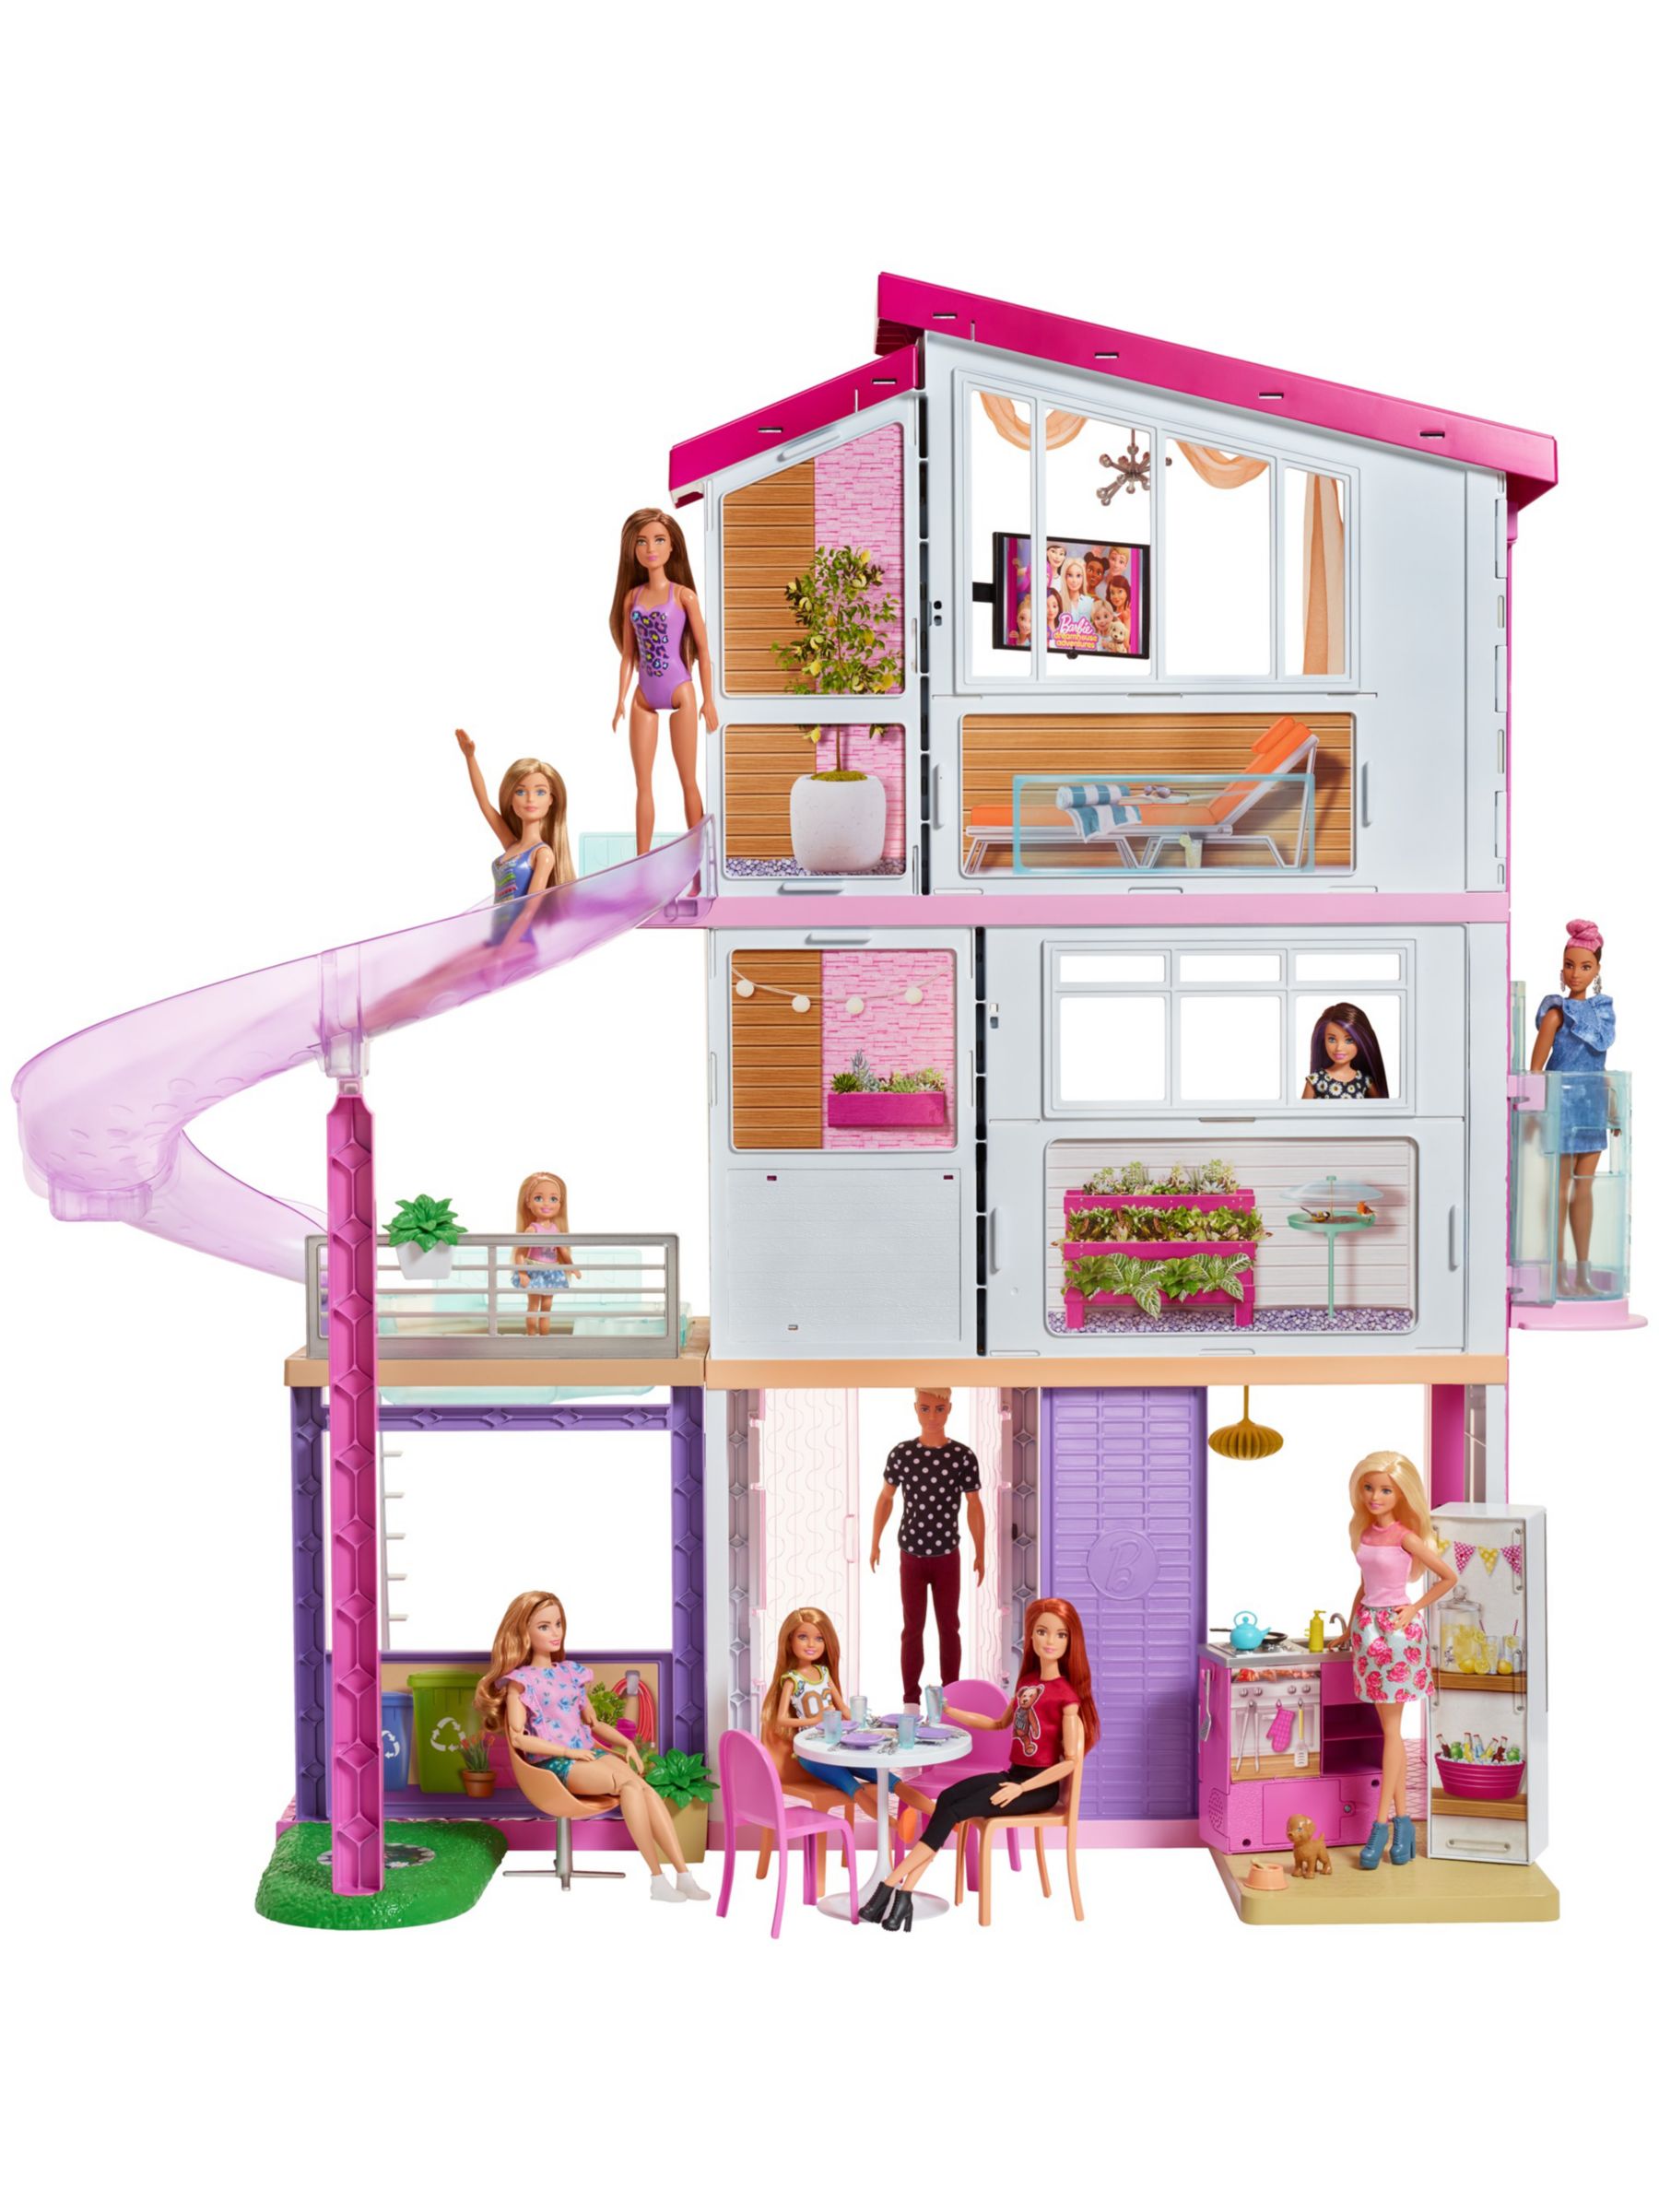 barbi dream house